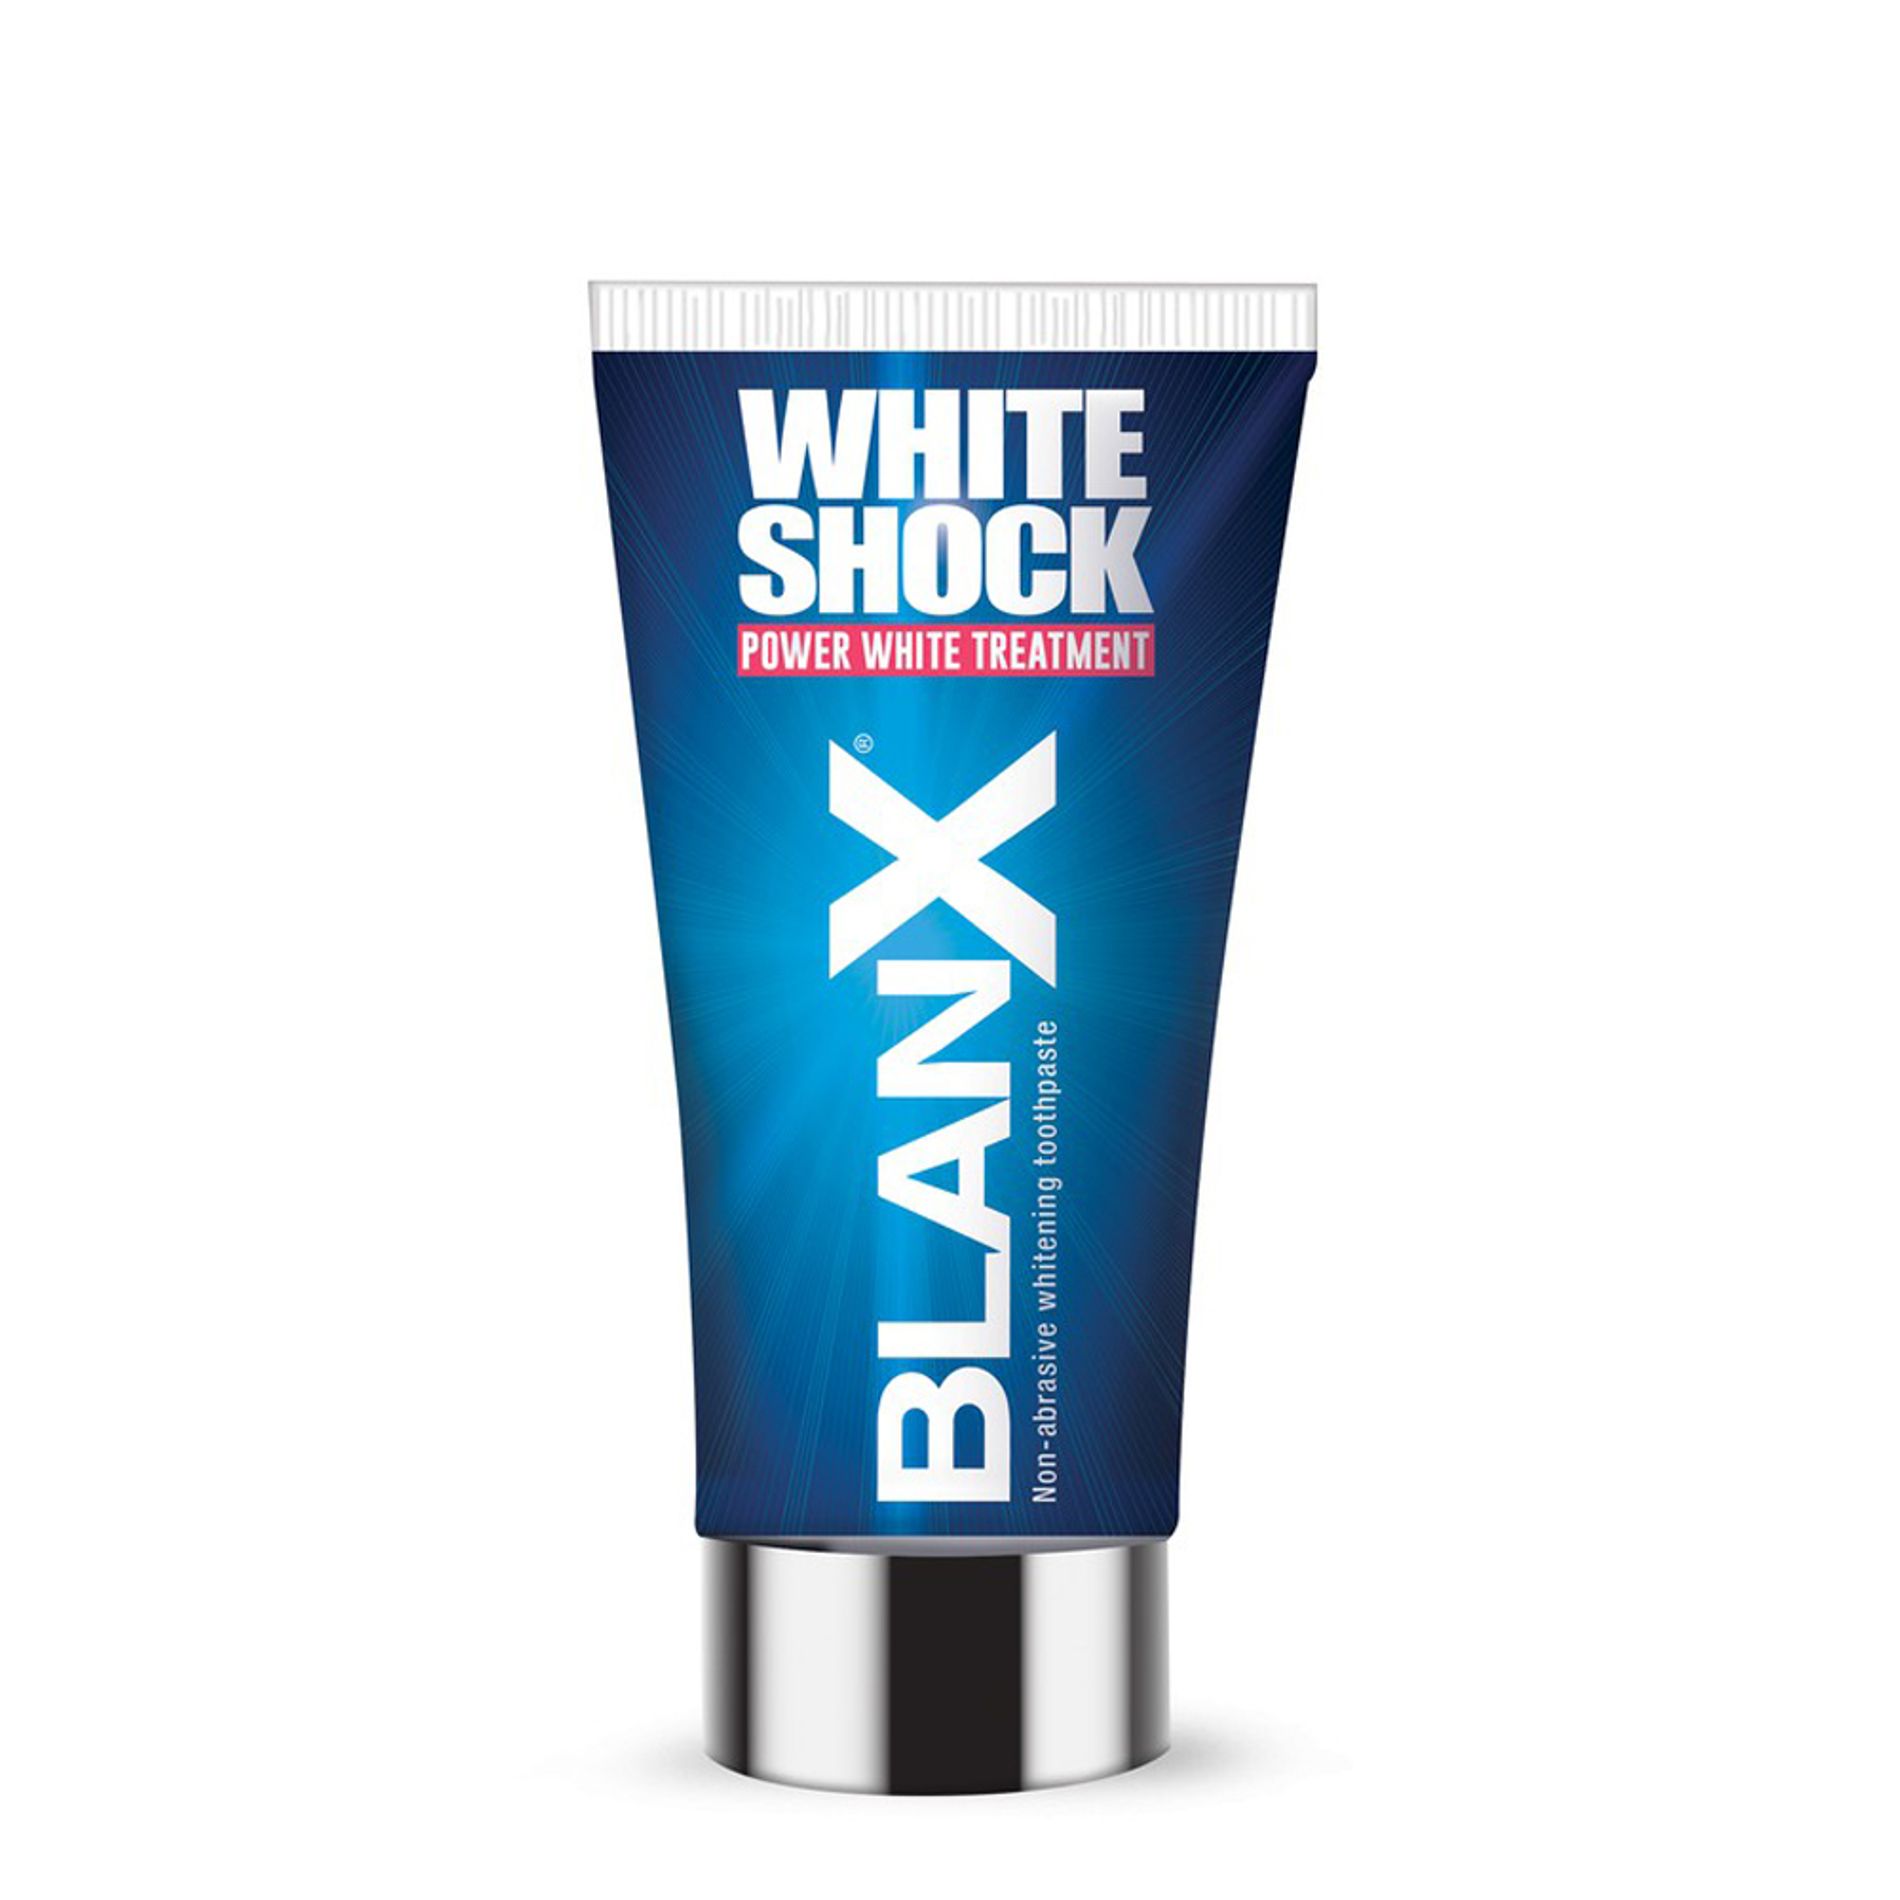 kem-danh-rang-lam-trang-bao-ve-blanx-white-shock-treatment-led-ga-50ml-2